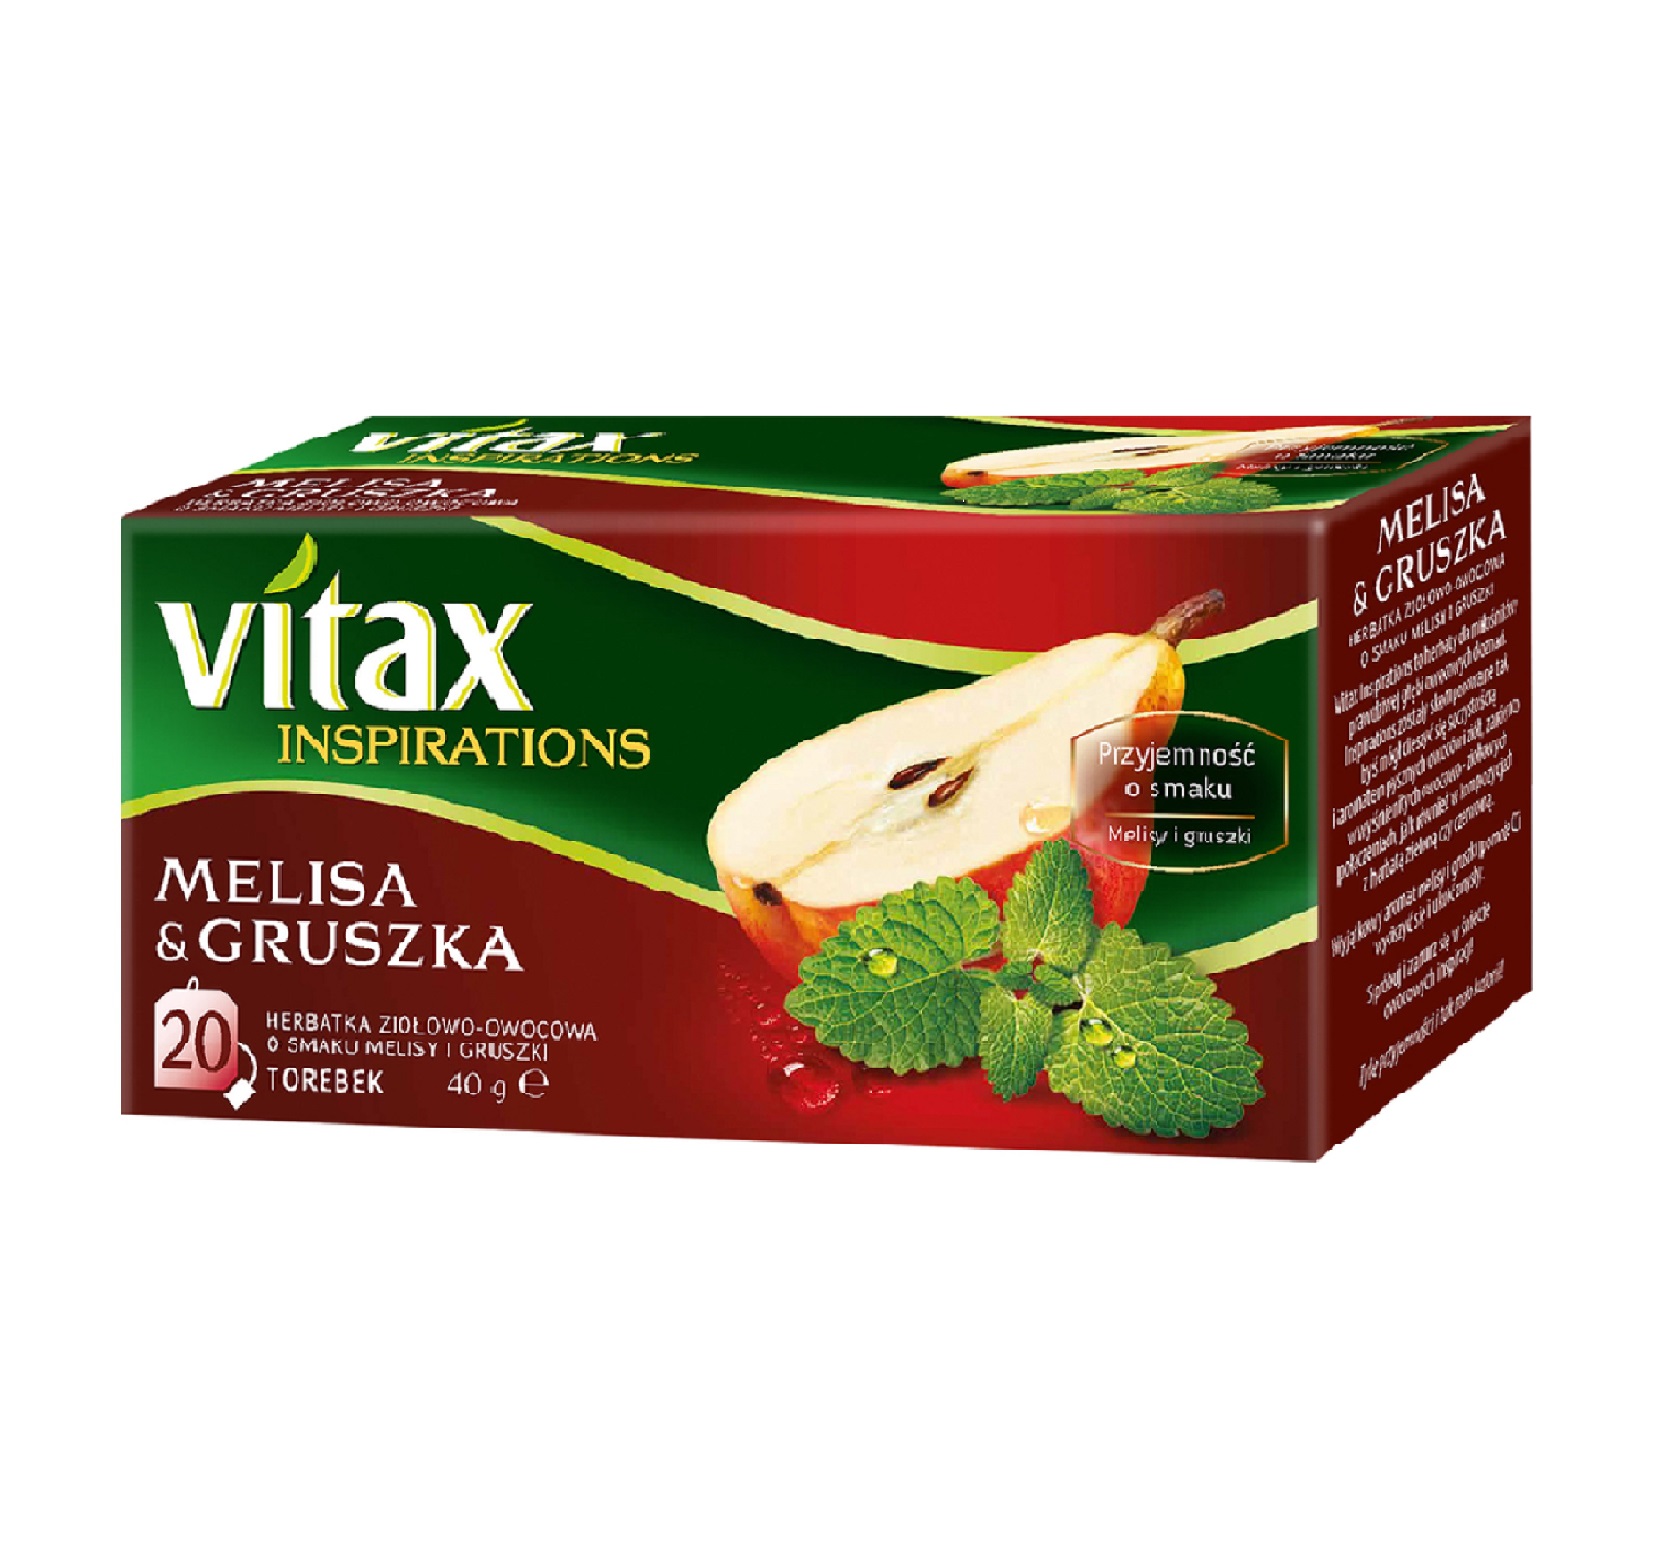 Vitax Inspirations melisa gruszka